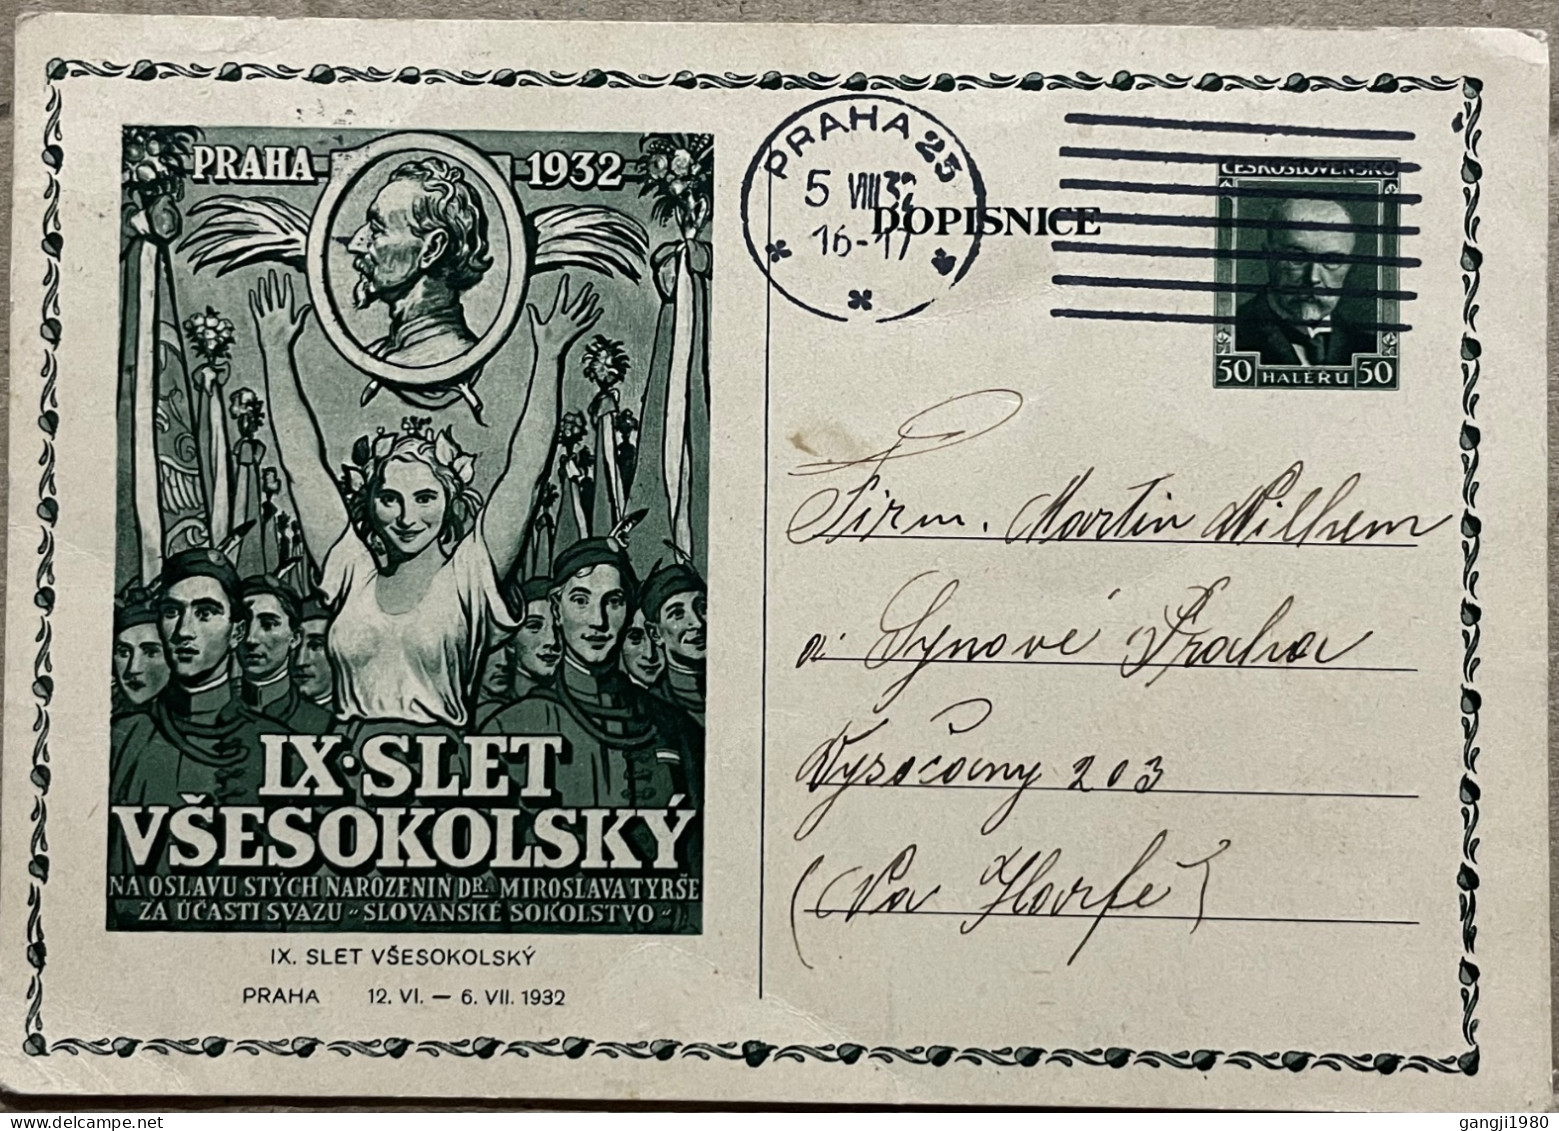 CZECHOSLOVAKIA 1932, STATIONERY CARD USED, ILLUSTRATE, WOMAN, CHARMING LADY, SLET YSESOKOLSKY, PRAHA CITY CANCEL - Brieven En Documenten